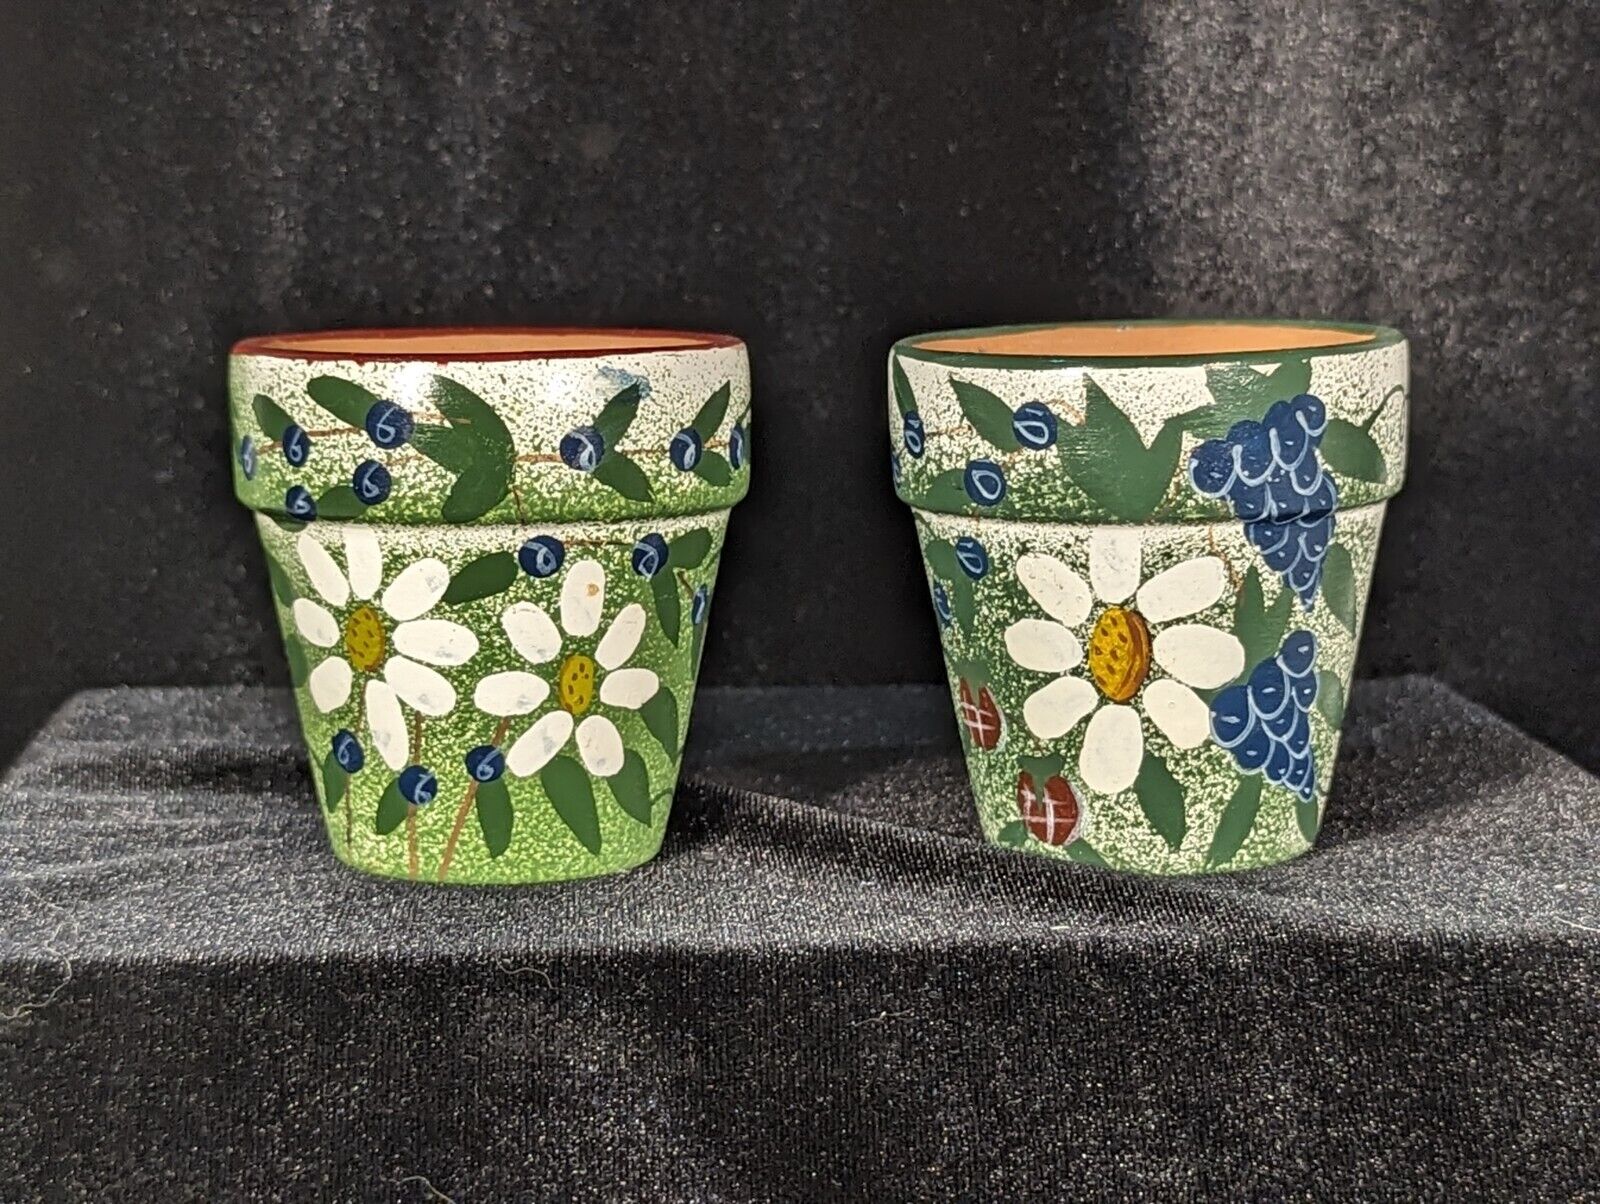 Vintage Terracotta Planters Handpainted Colorful Floral Daisy Design